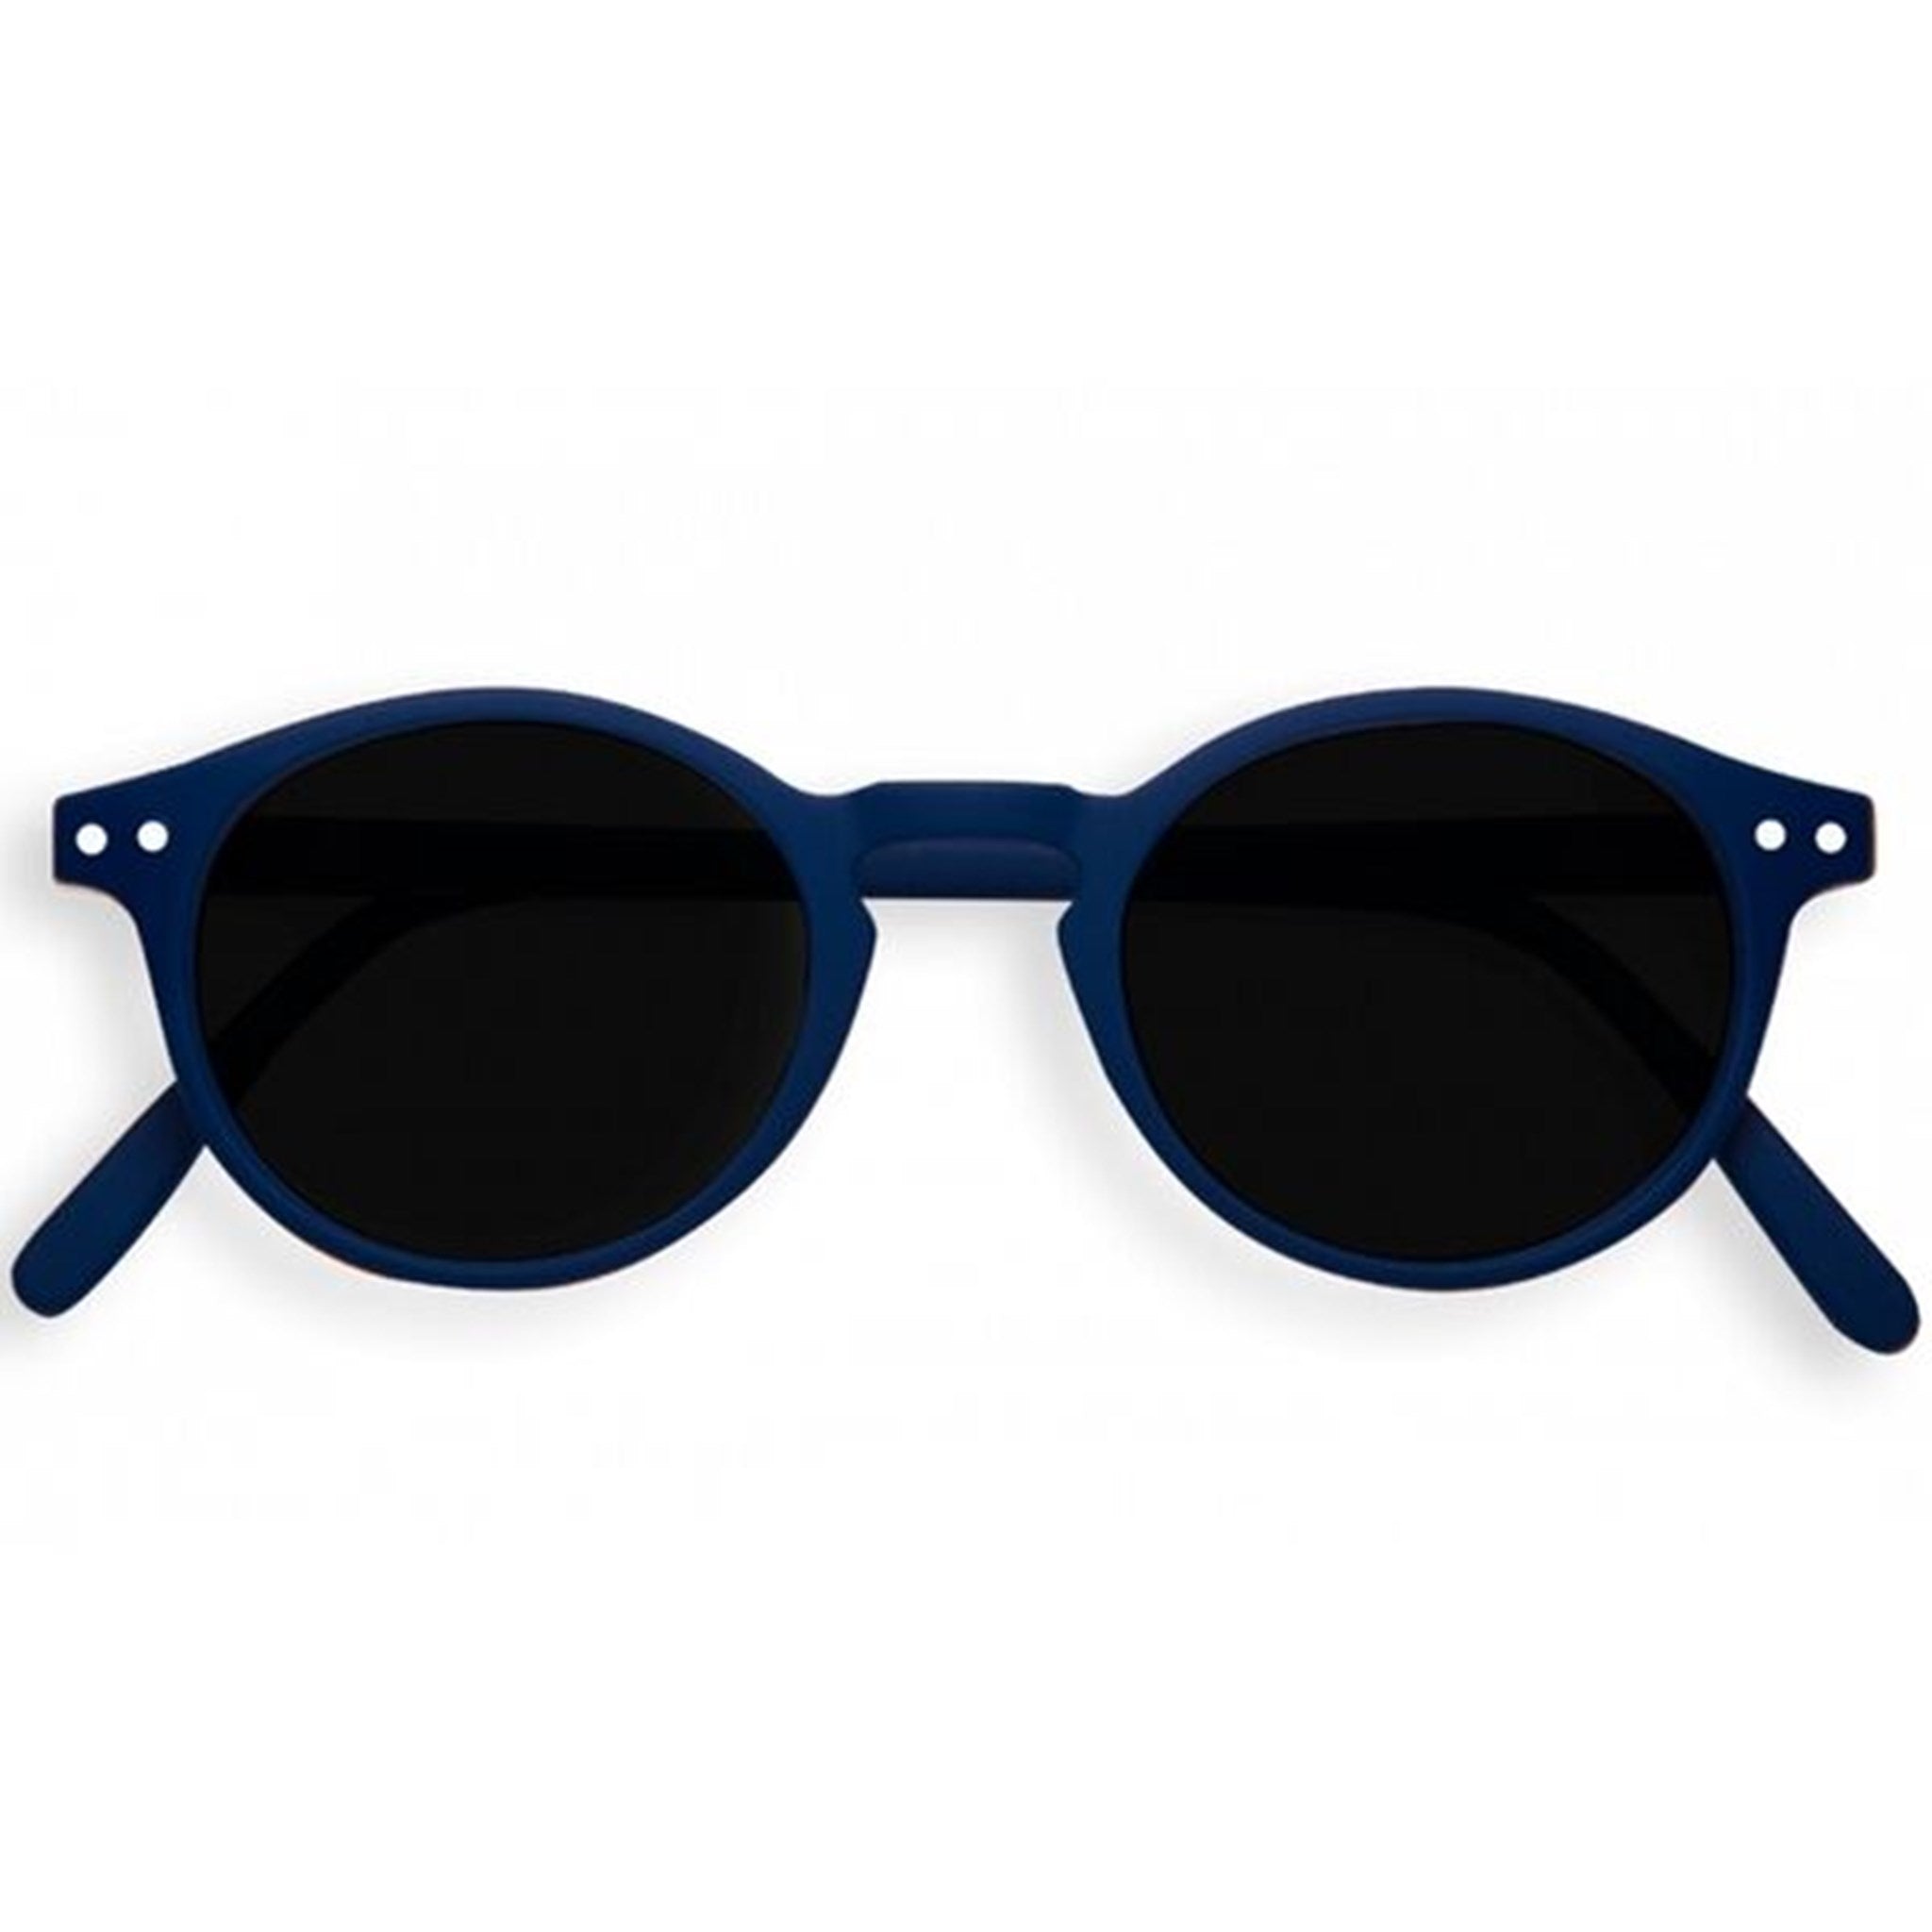 IZIPIZI Sunglasses - Navy Blue